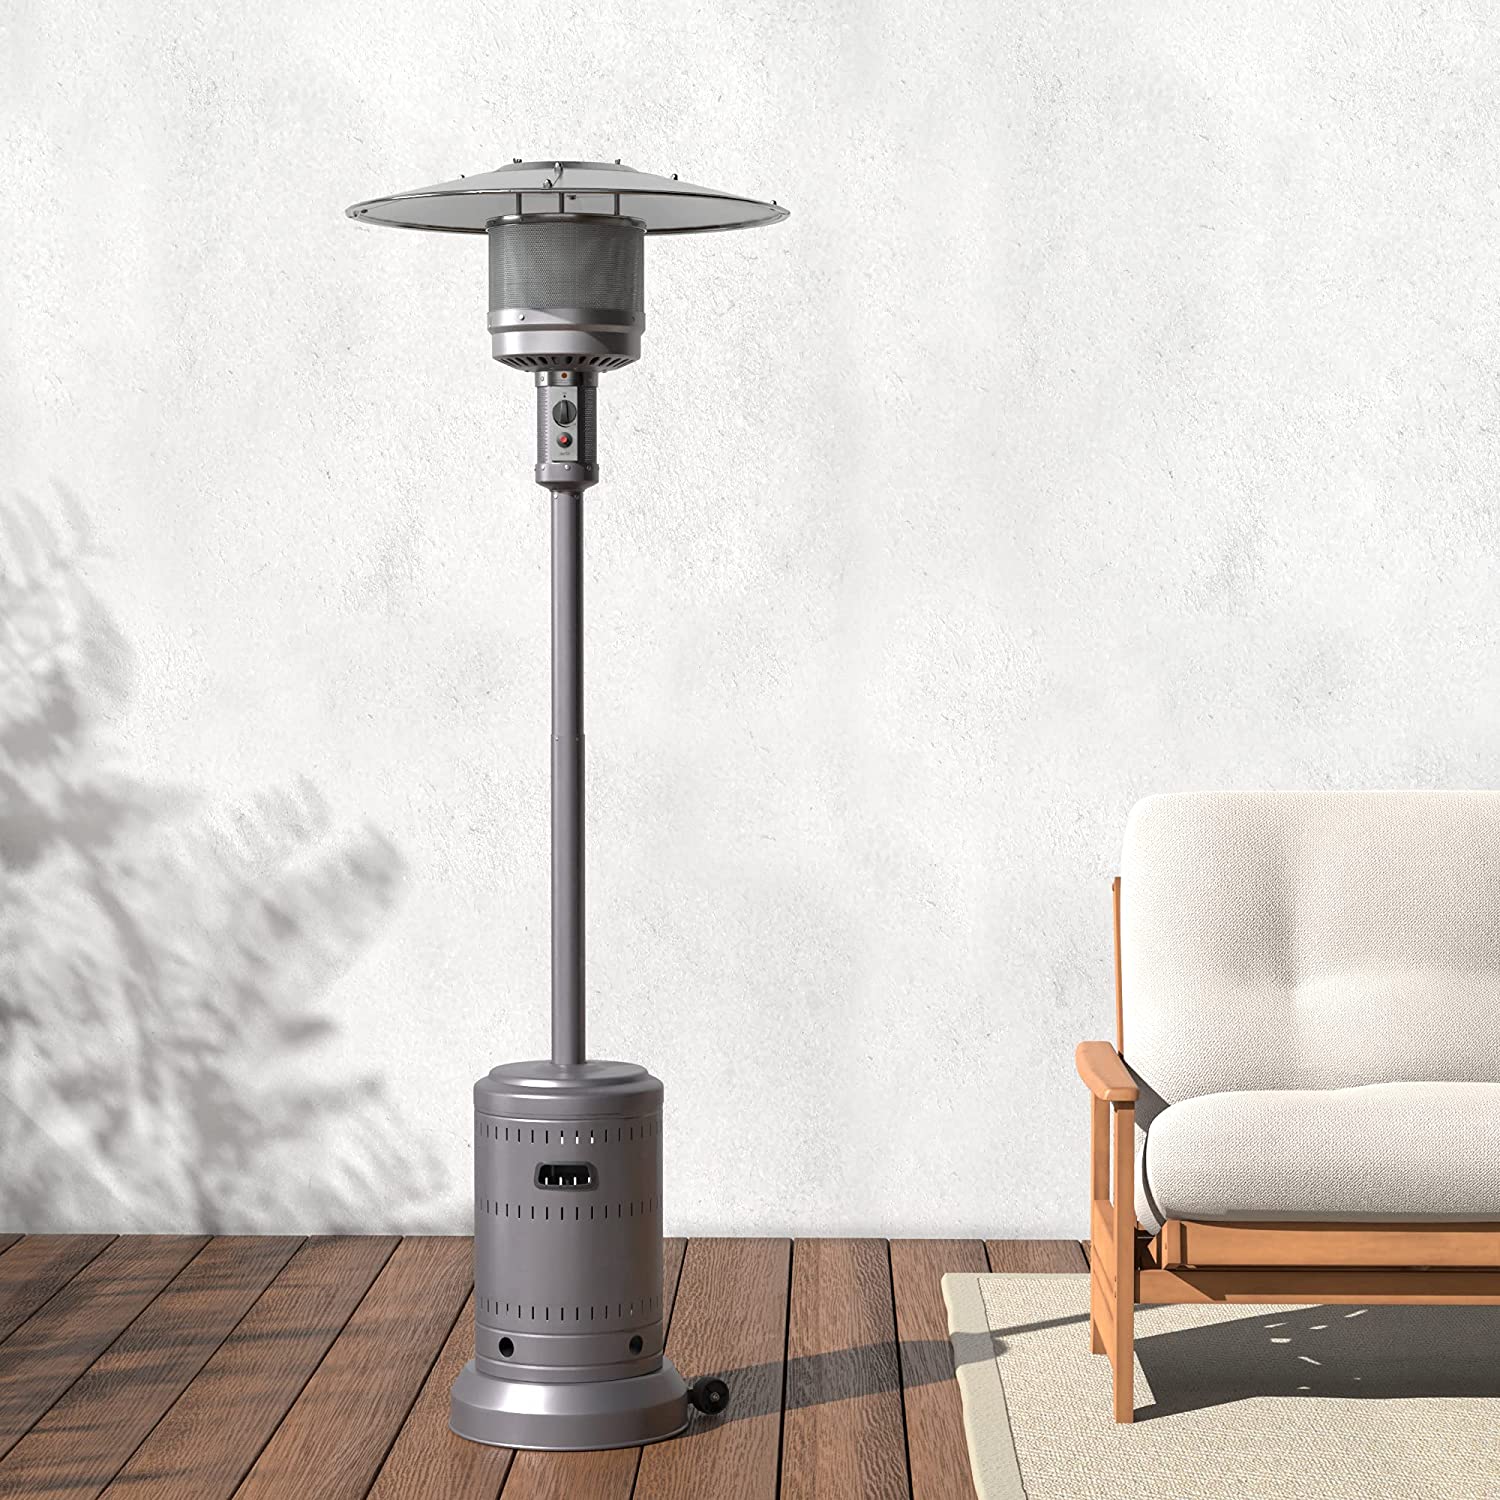 Amazon Basics 46,000 BTU Outdoor Propane Patio Heater with Wheels (Slate Gray) $51.01